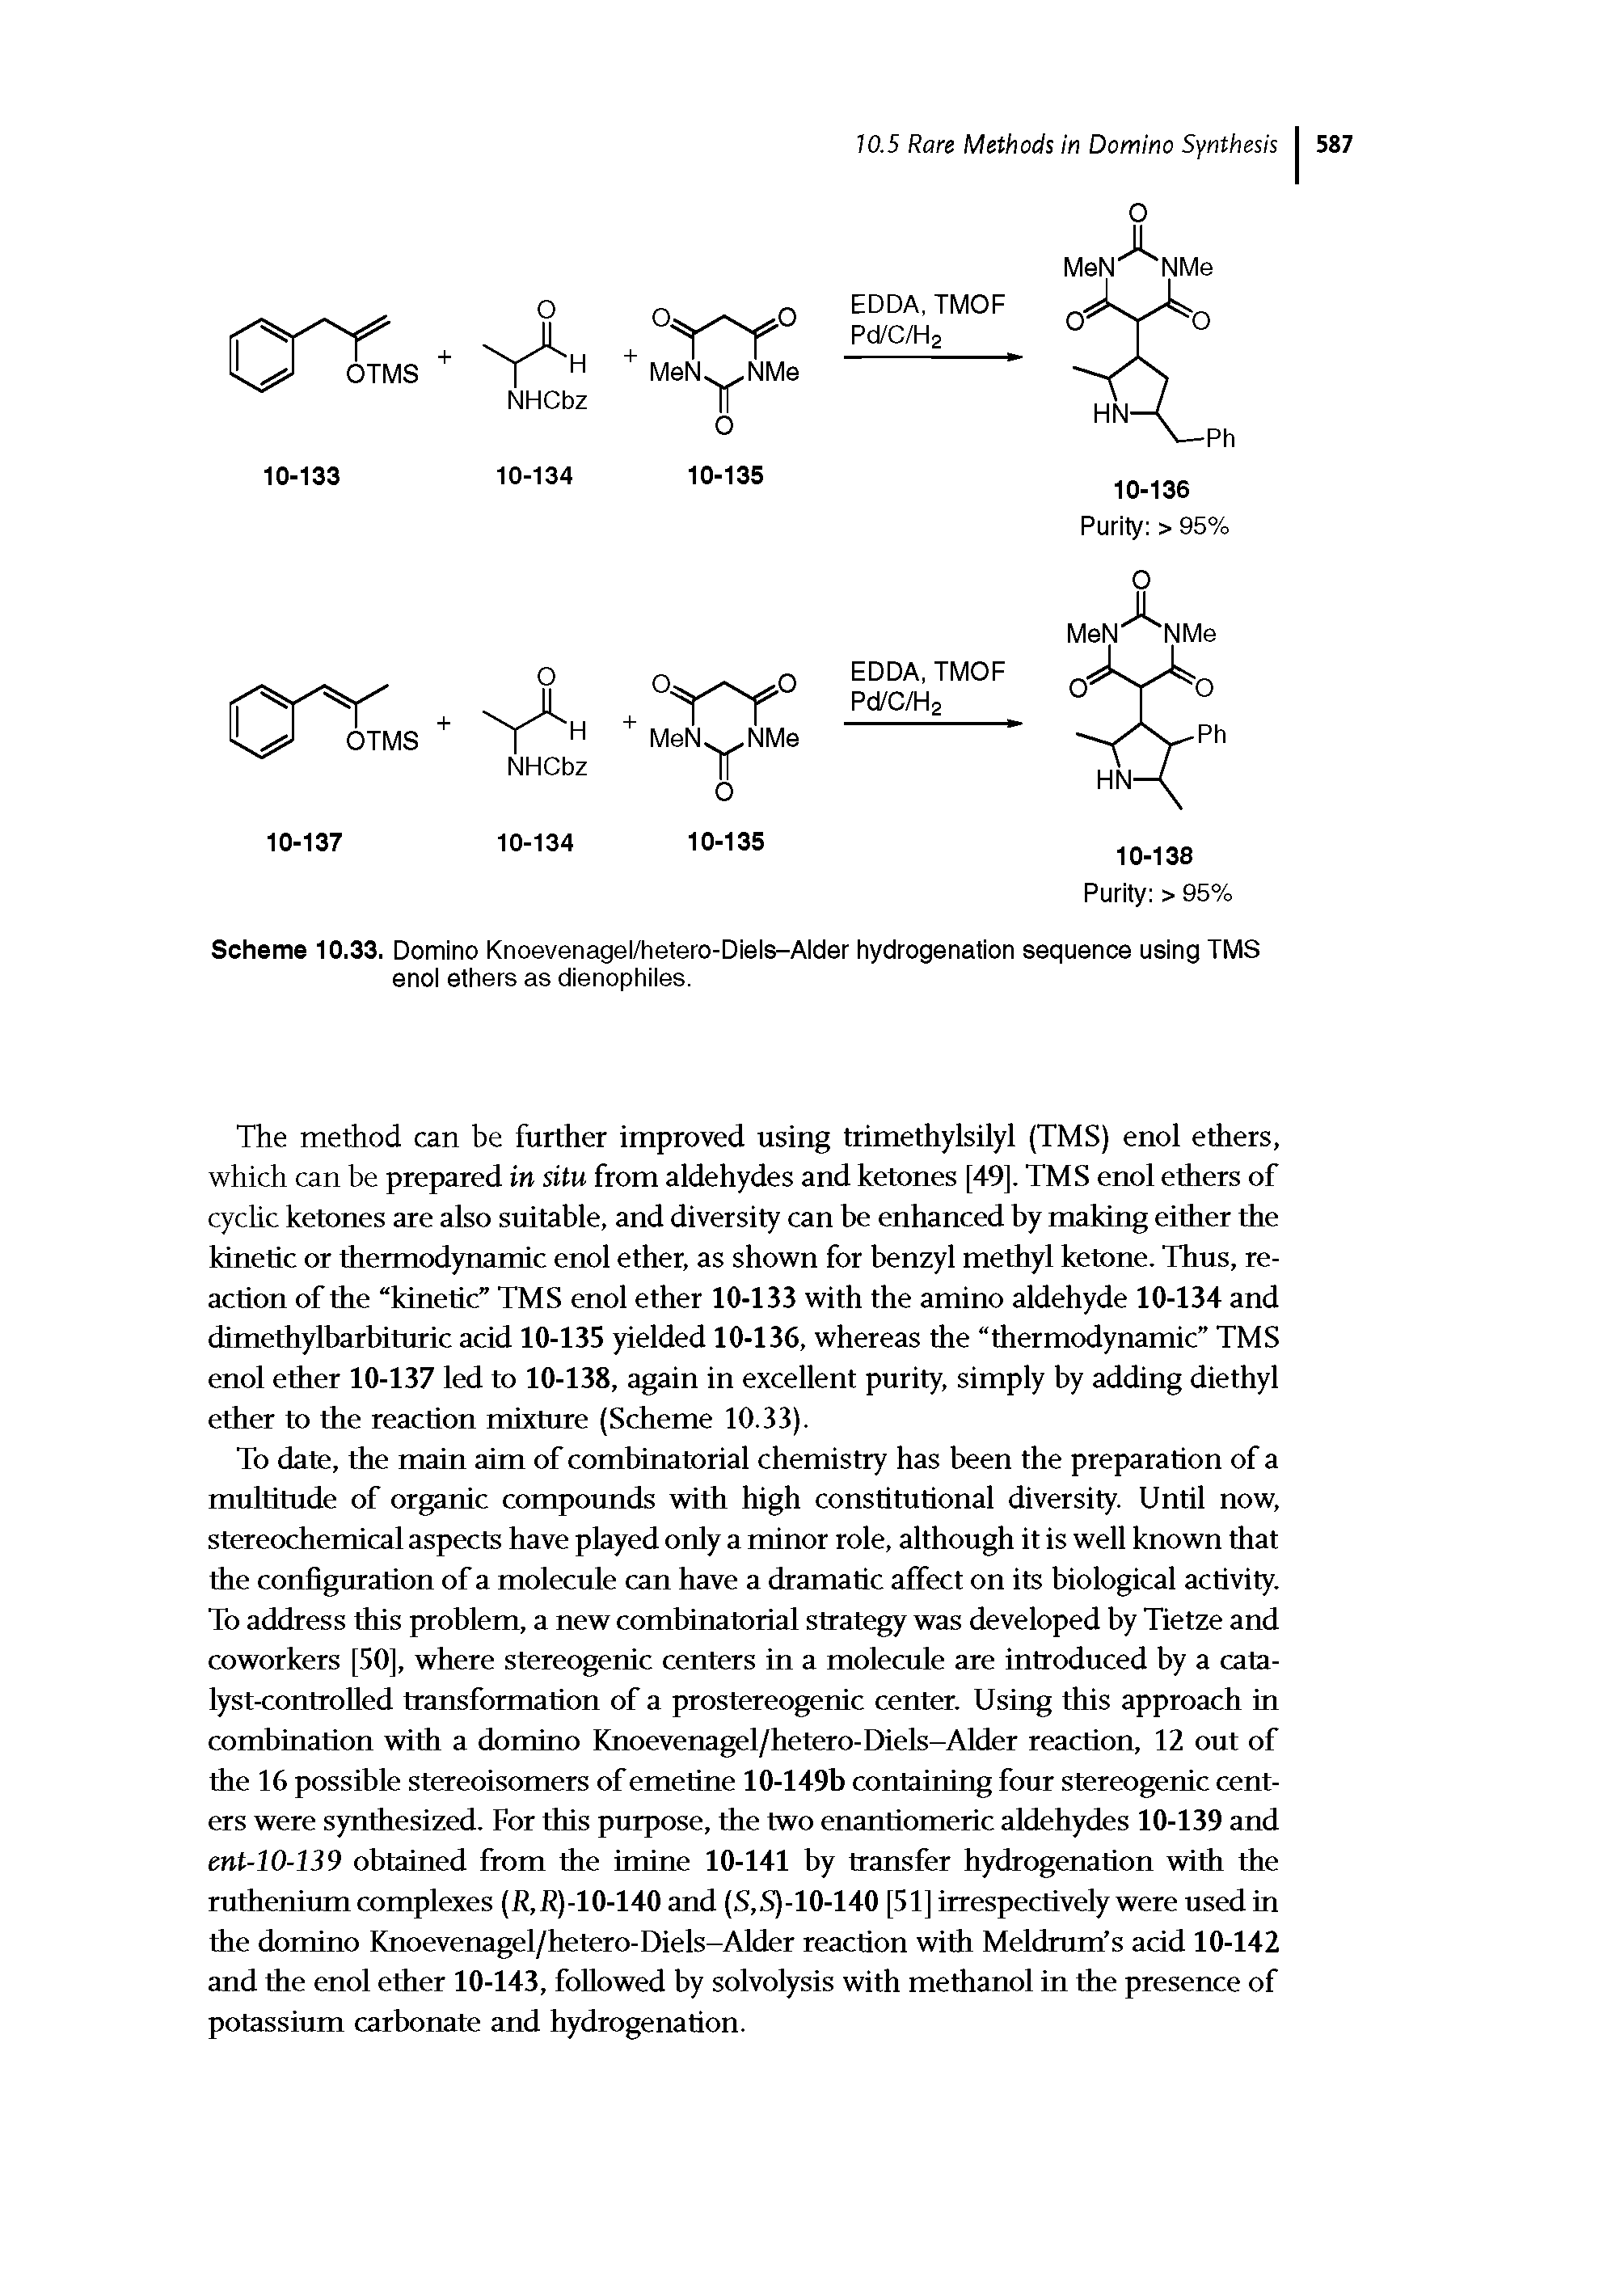 Scheme 10.33. Domino Knoevenagel/hetero-Diels-Alder hydrogenation sequence using TMS enol ethers as dienophiles.